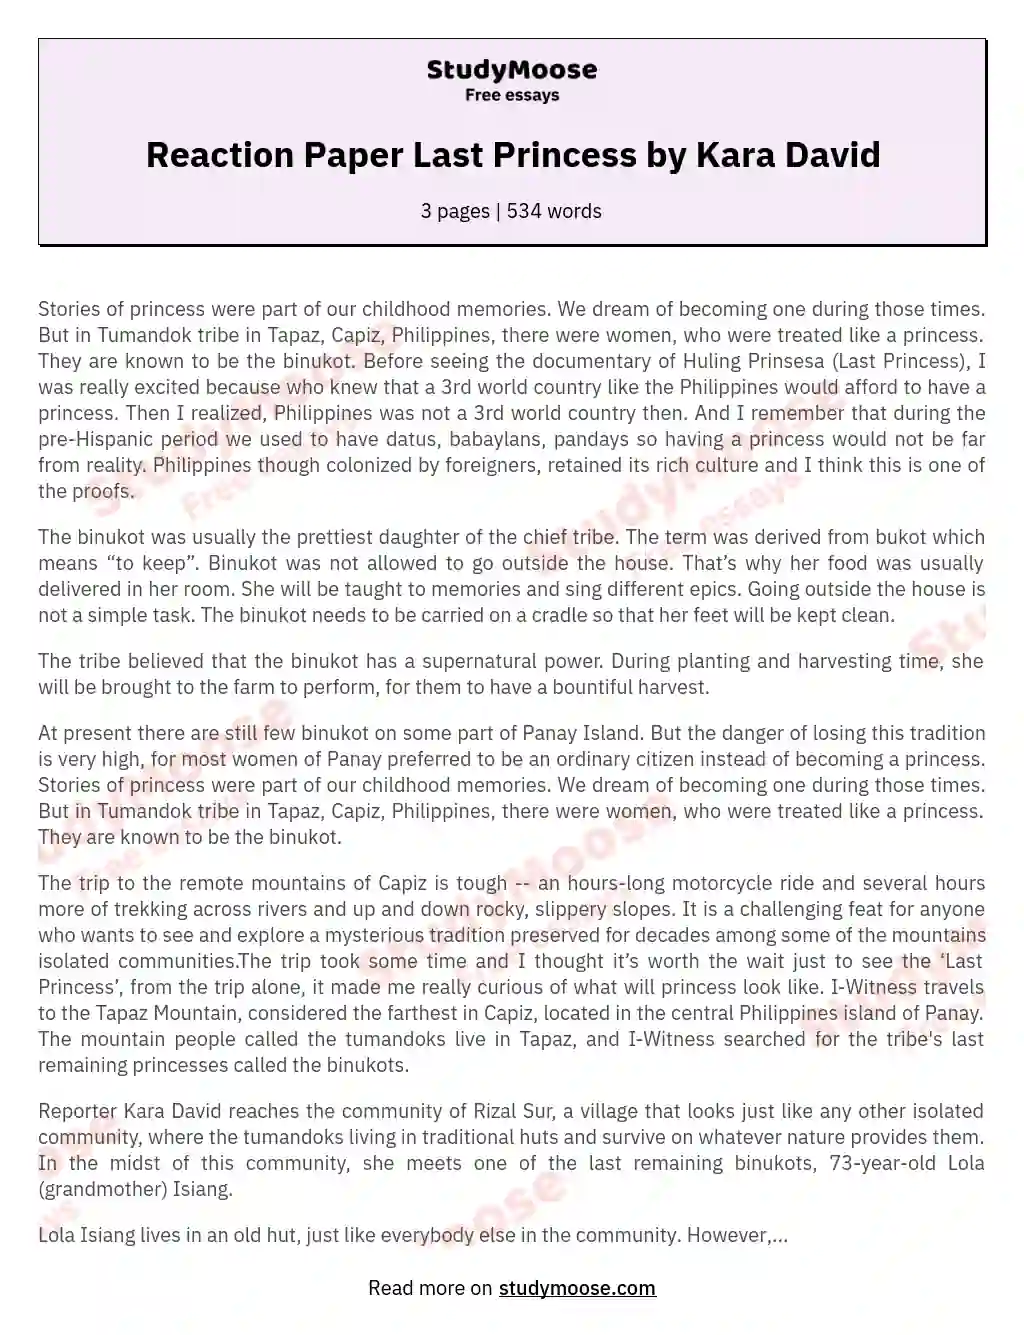 Reaction Paper Last Princess by Kara David essay